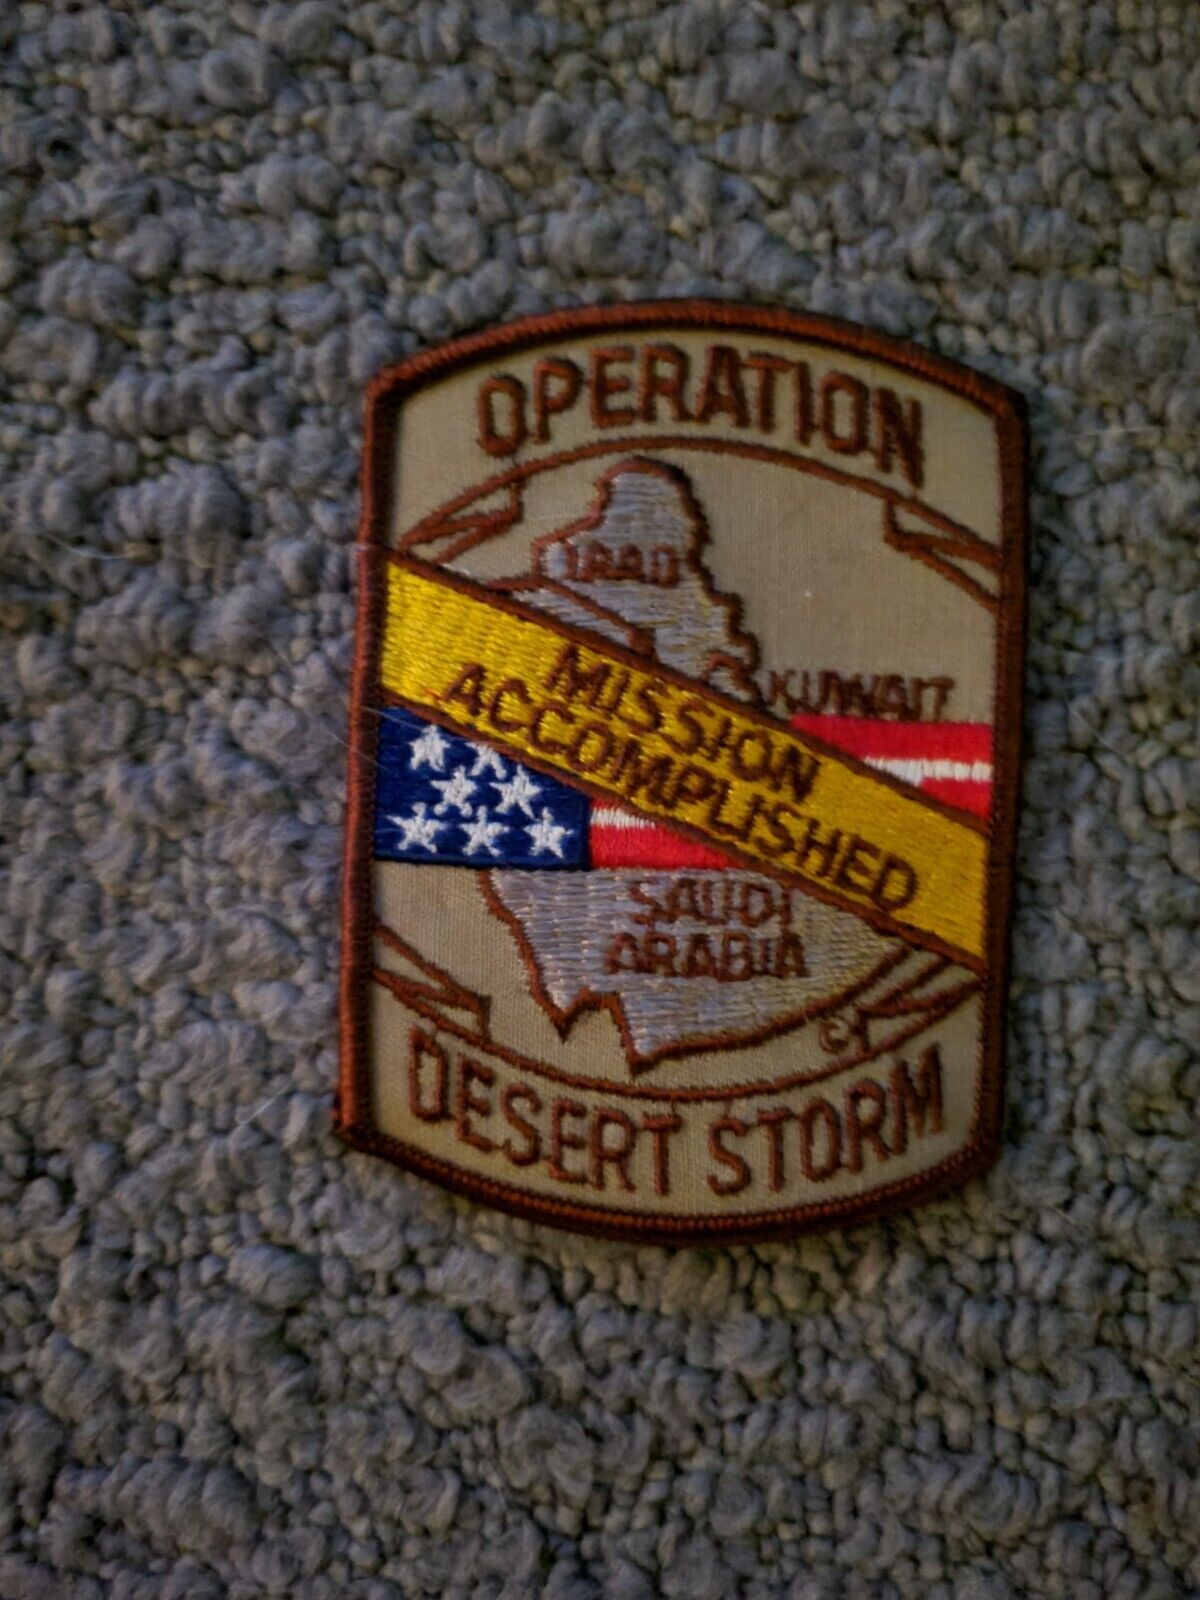 operation desert storm patch